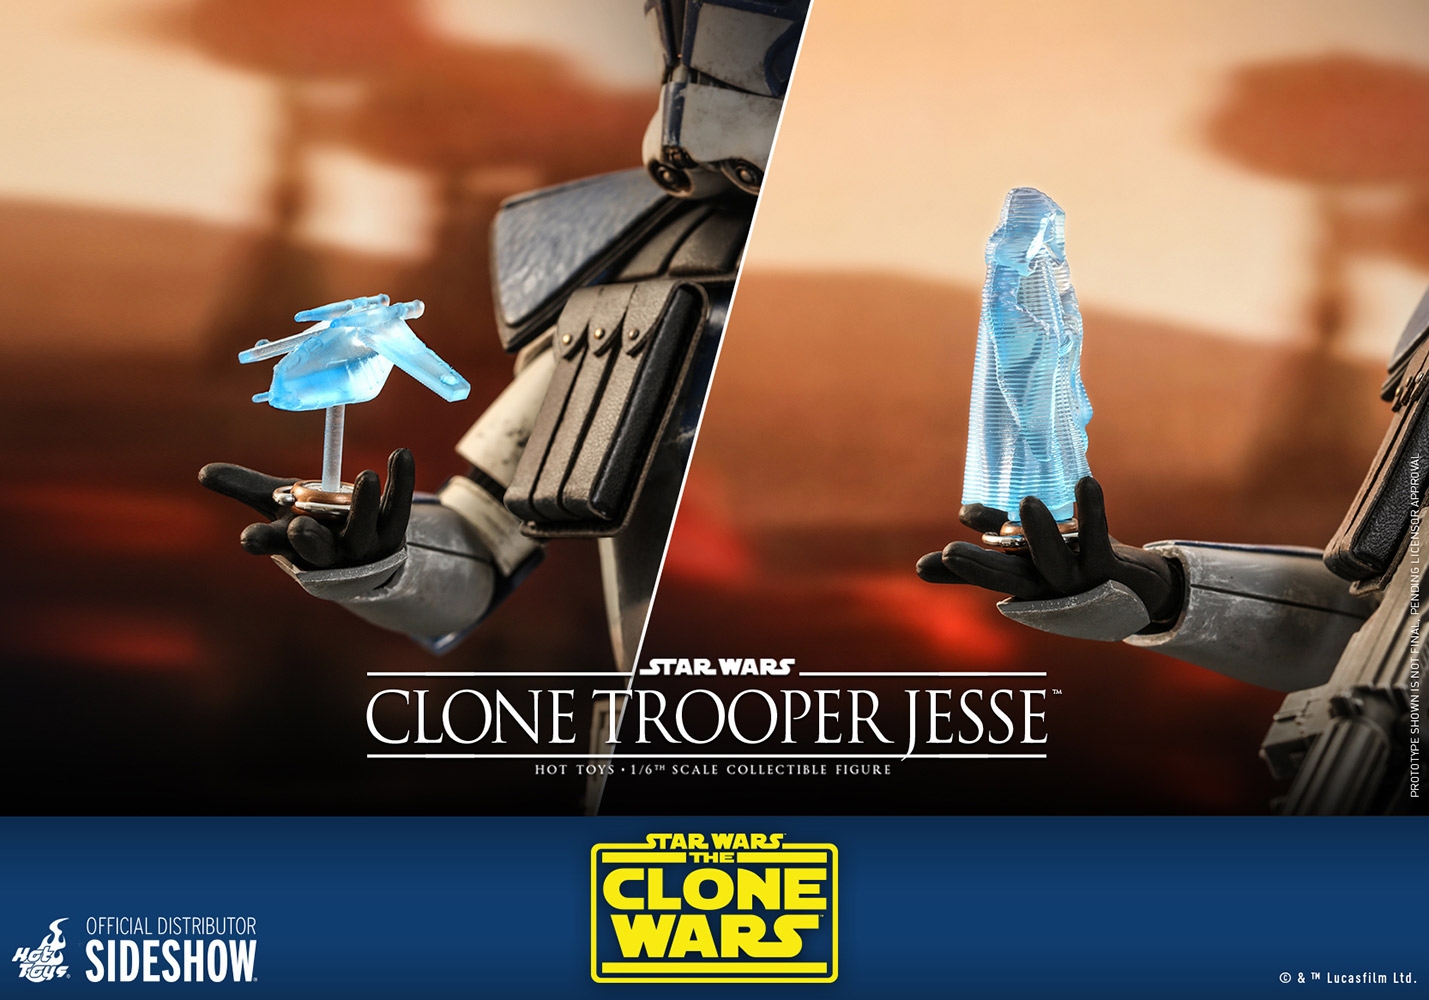 clone-trooper-jesse_star-wars_gallery_61855d648c84b.jpg